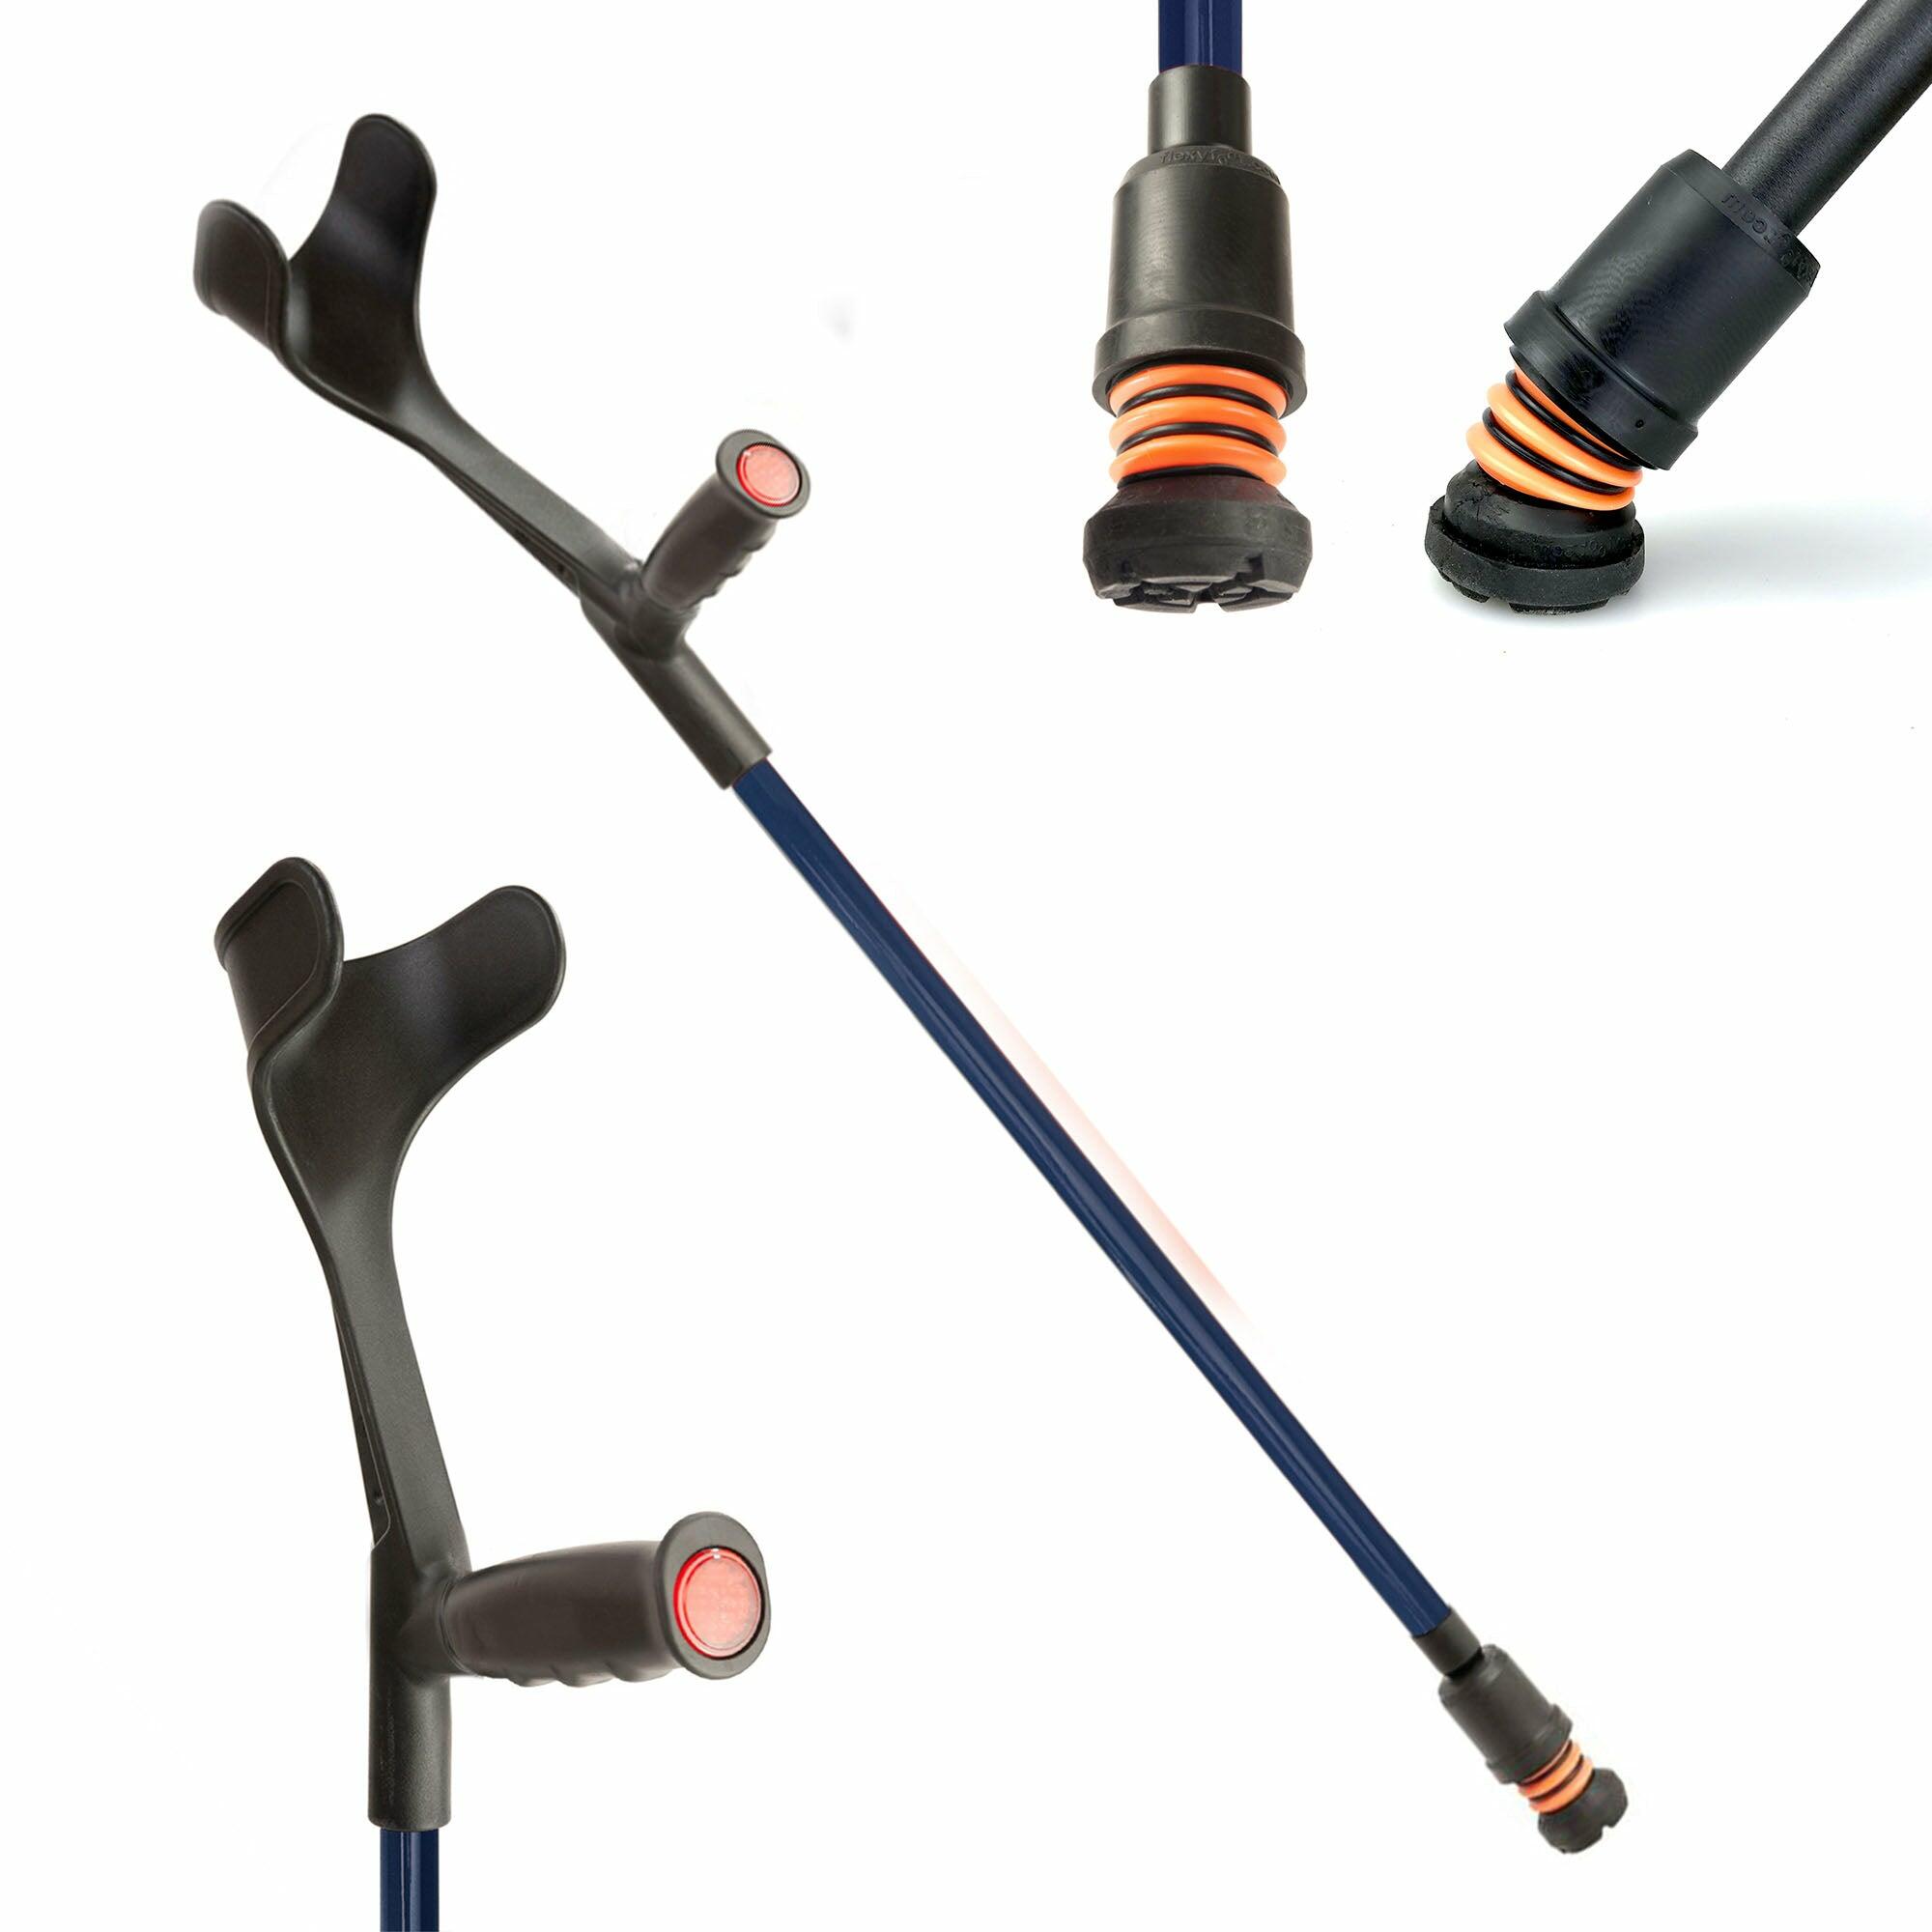 Flexyfoot Soft Grip Open Cuff Crutches - Blue